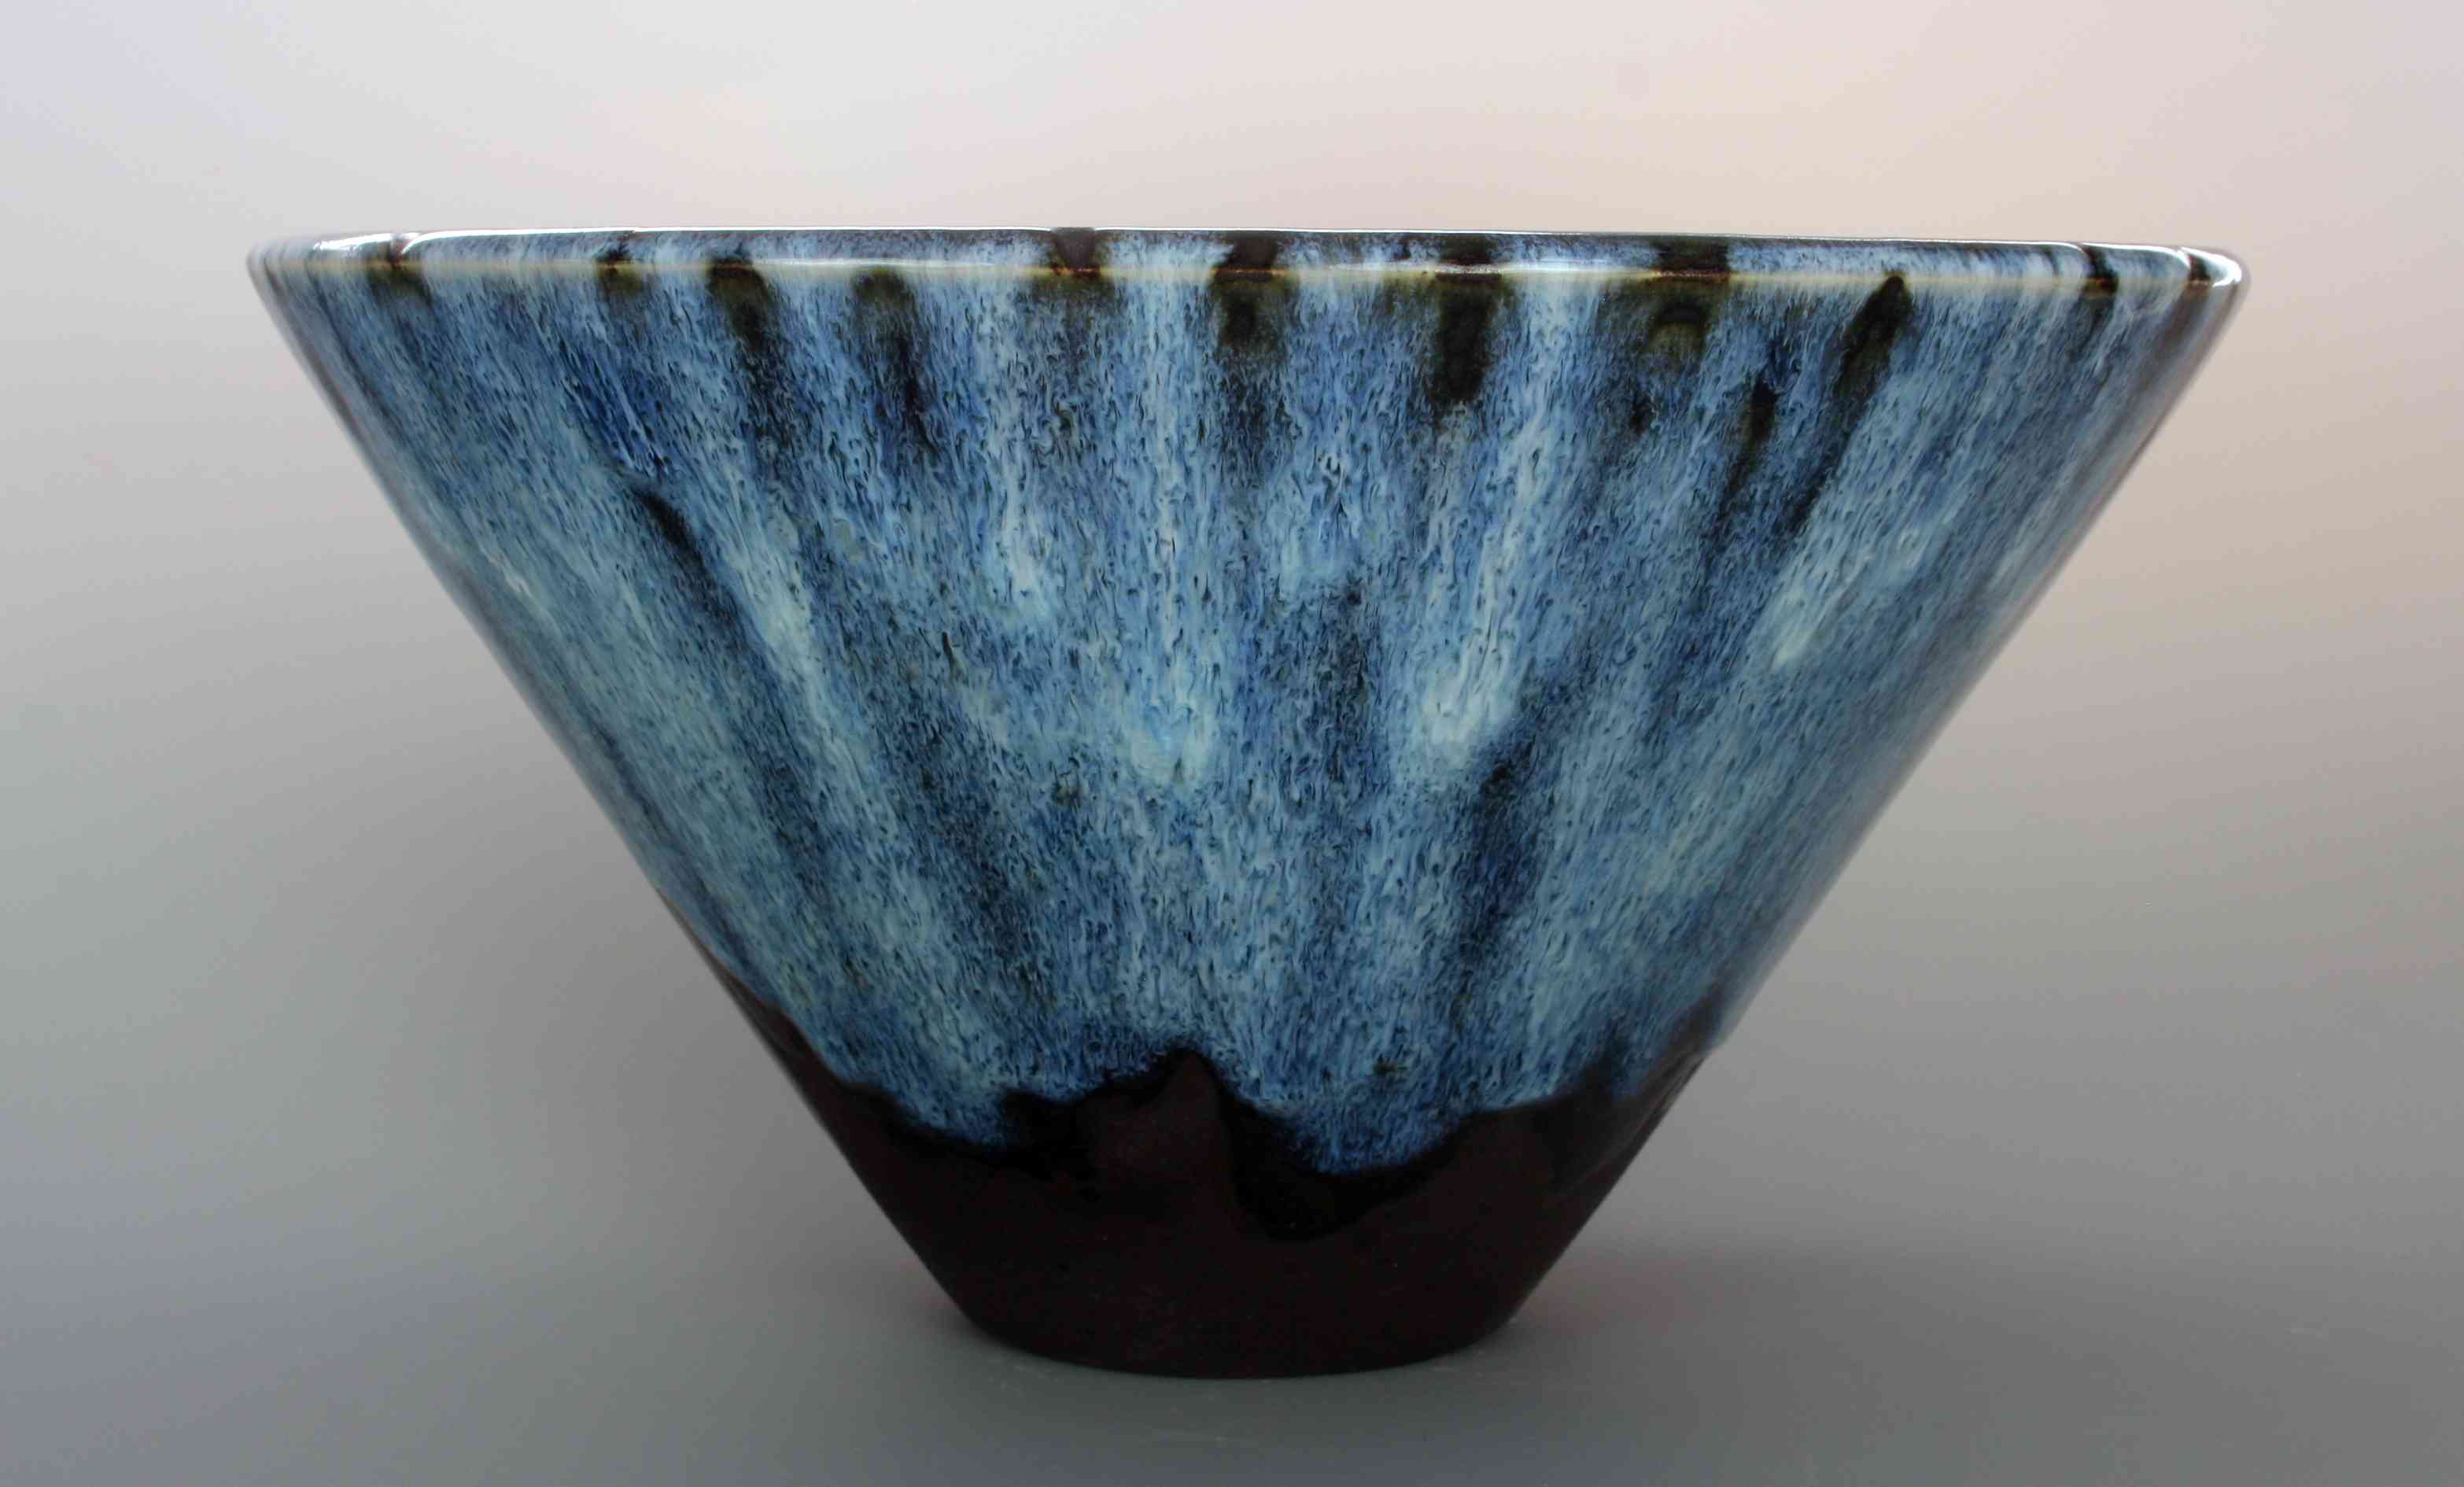 Aqua bowl - stoneware bowl with black slip and synthetic wood ash glaze